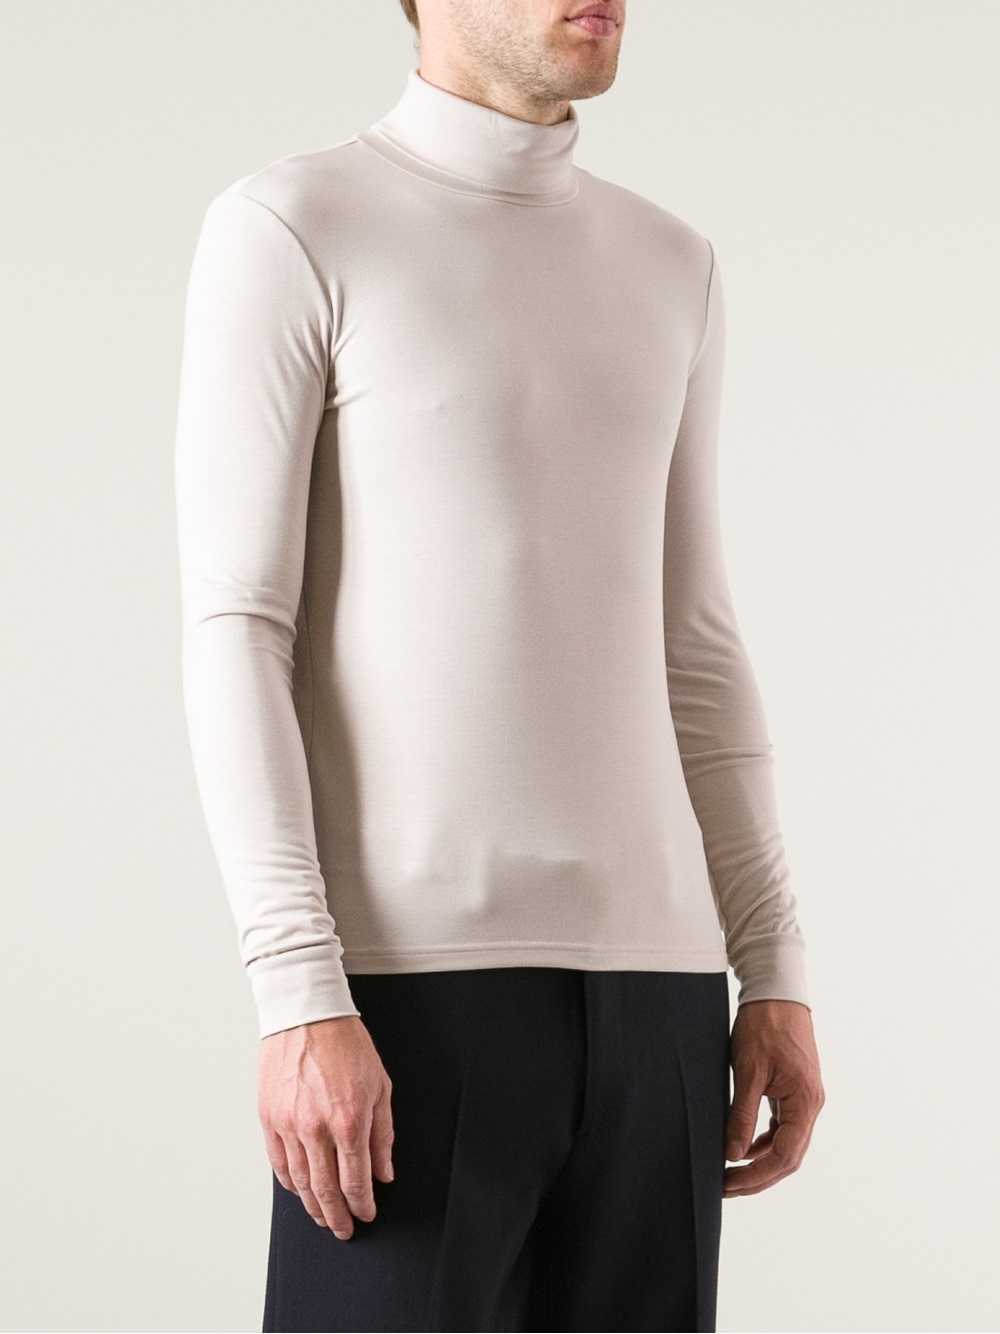 Raf simons Turtleneck Sweater in Natural for Men | Lyst